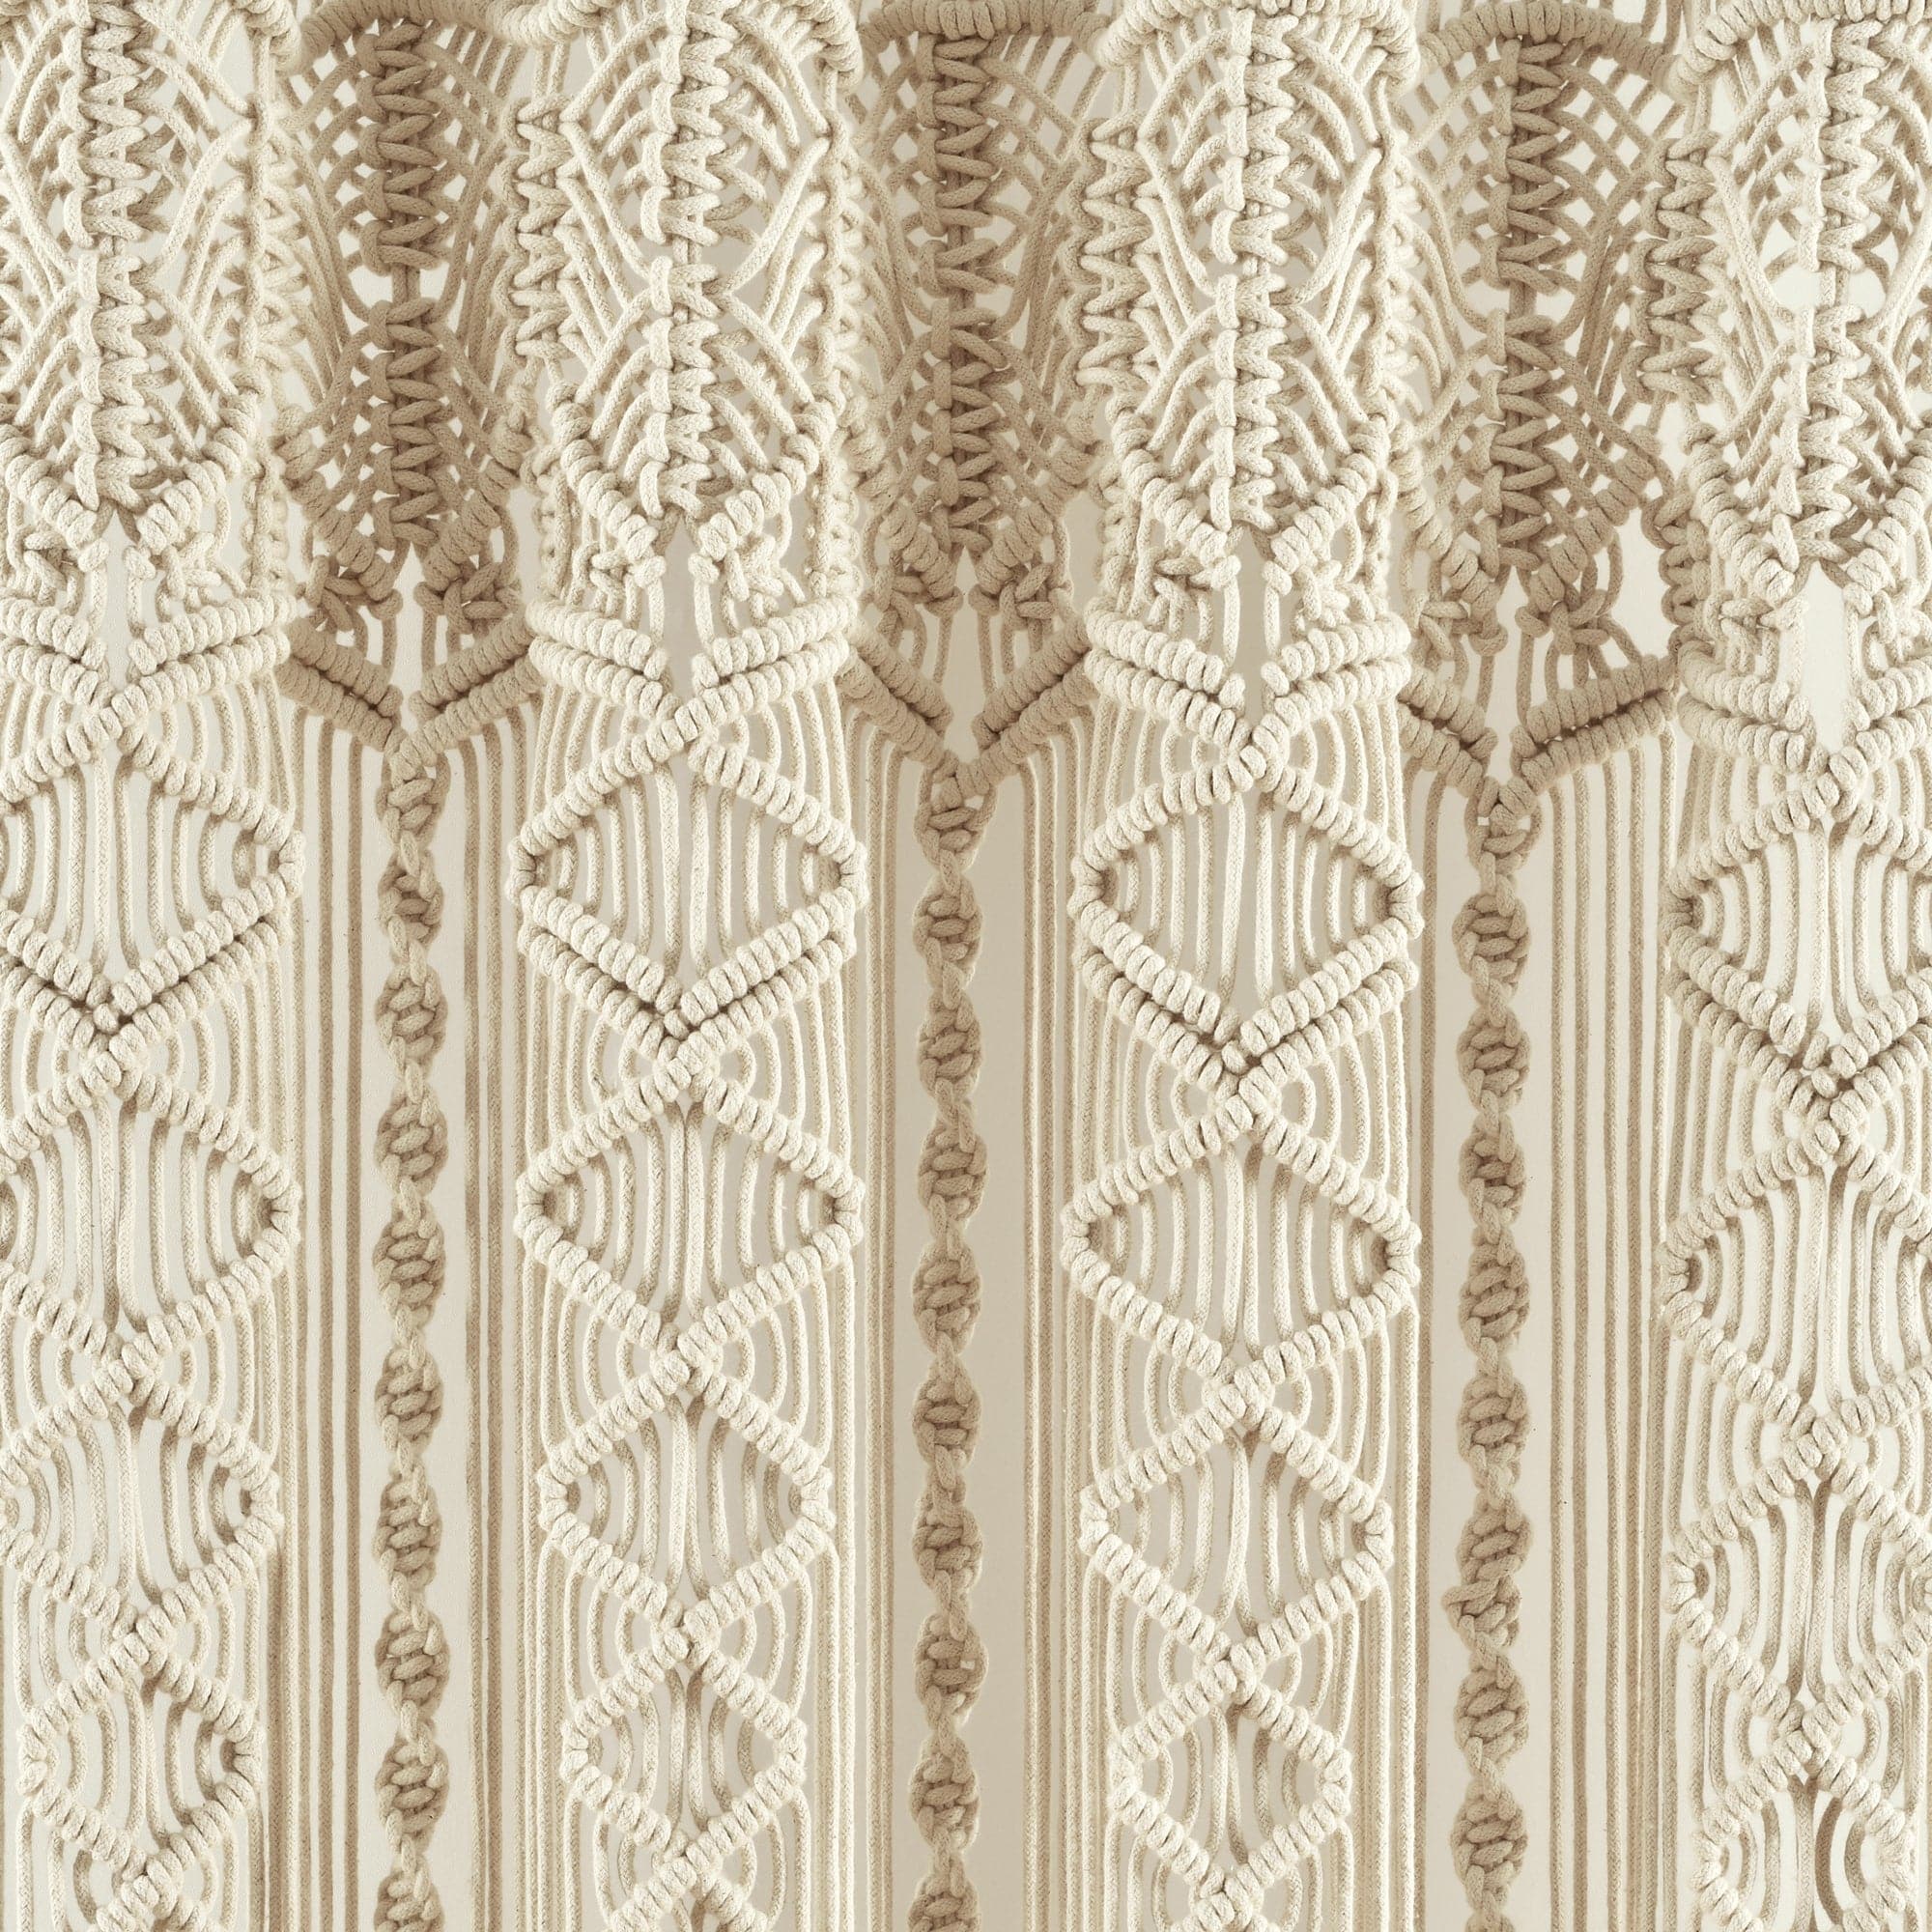 Boho Macrame Textured Cotton Valance/Kitchen Curtain/Wall Decor Lush